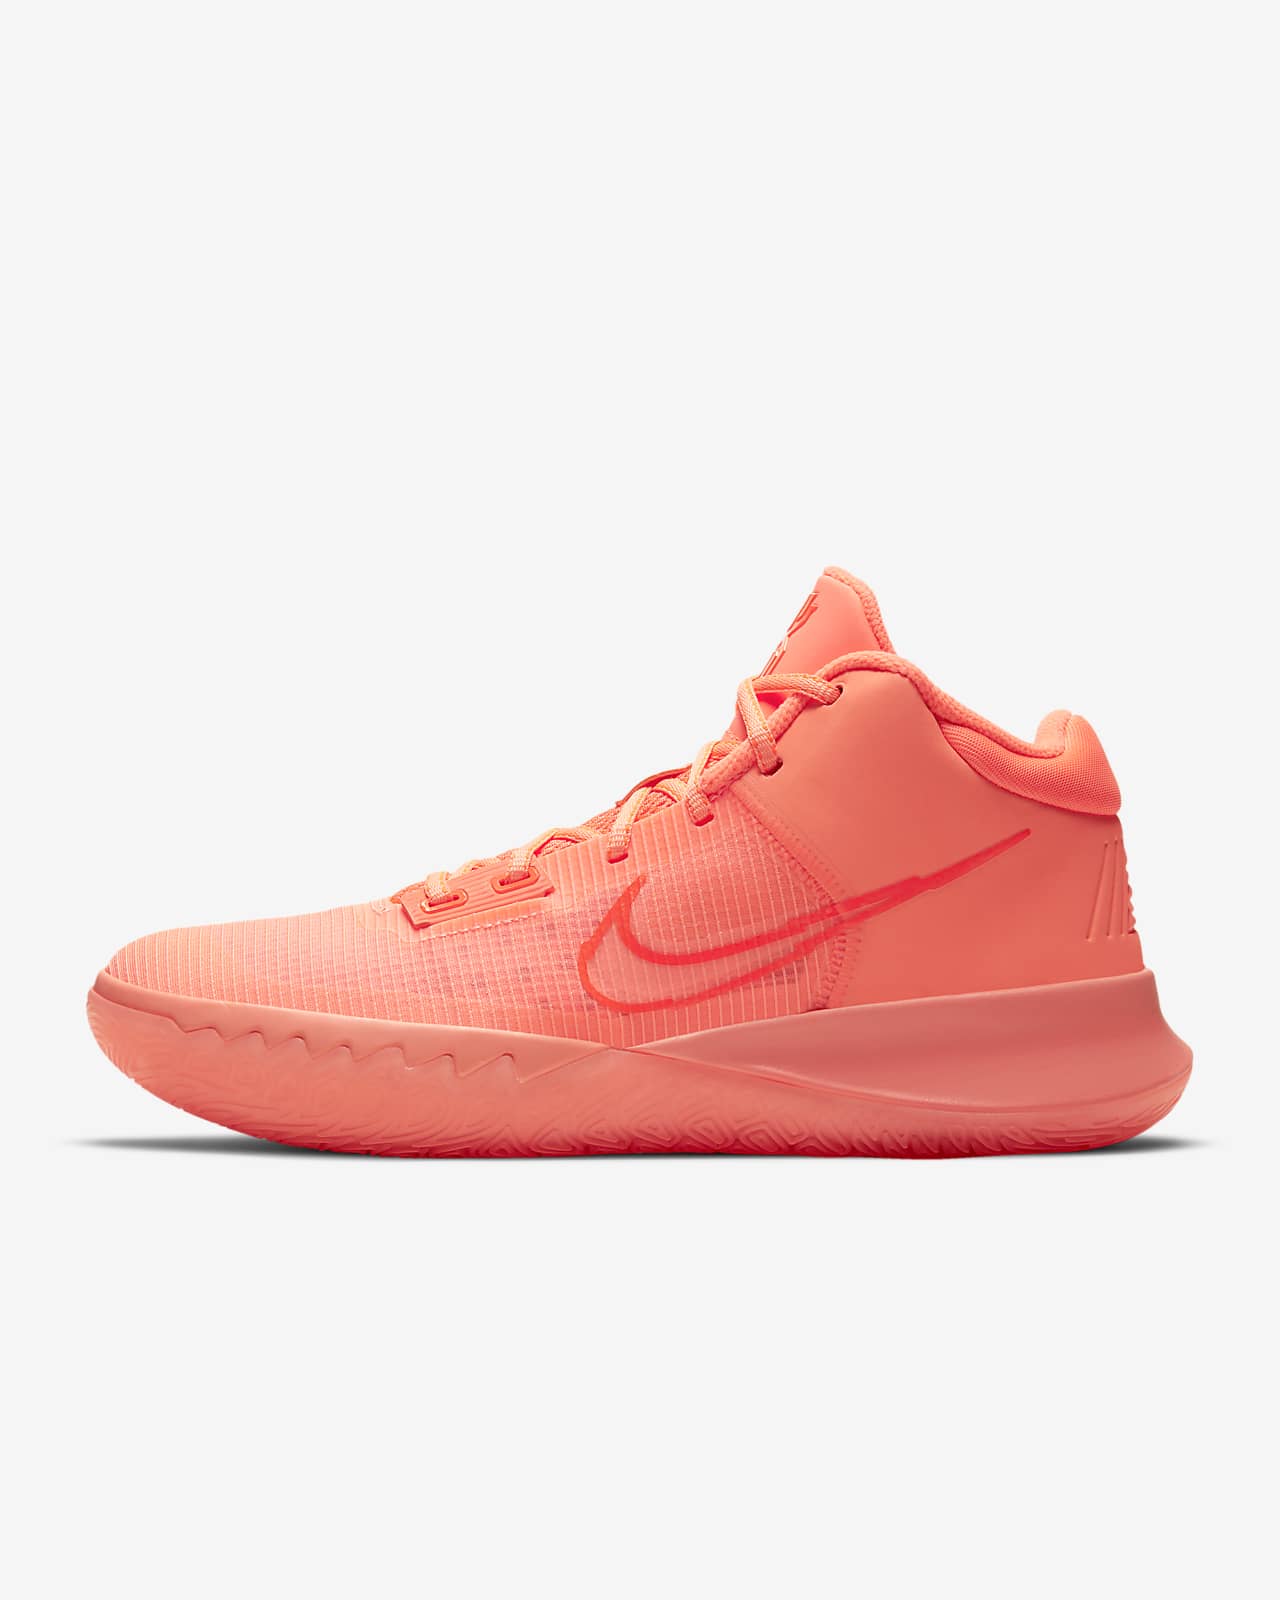 Kyrie Flytrap 4 Basketball Shoe. Nike LU